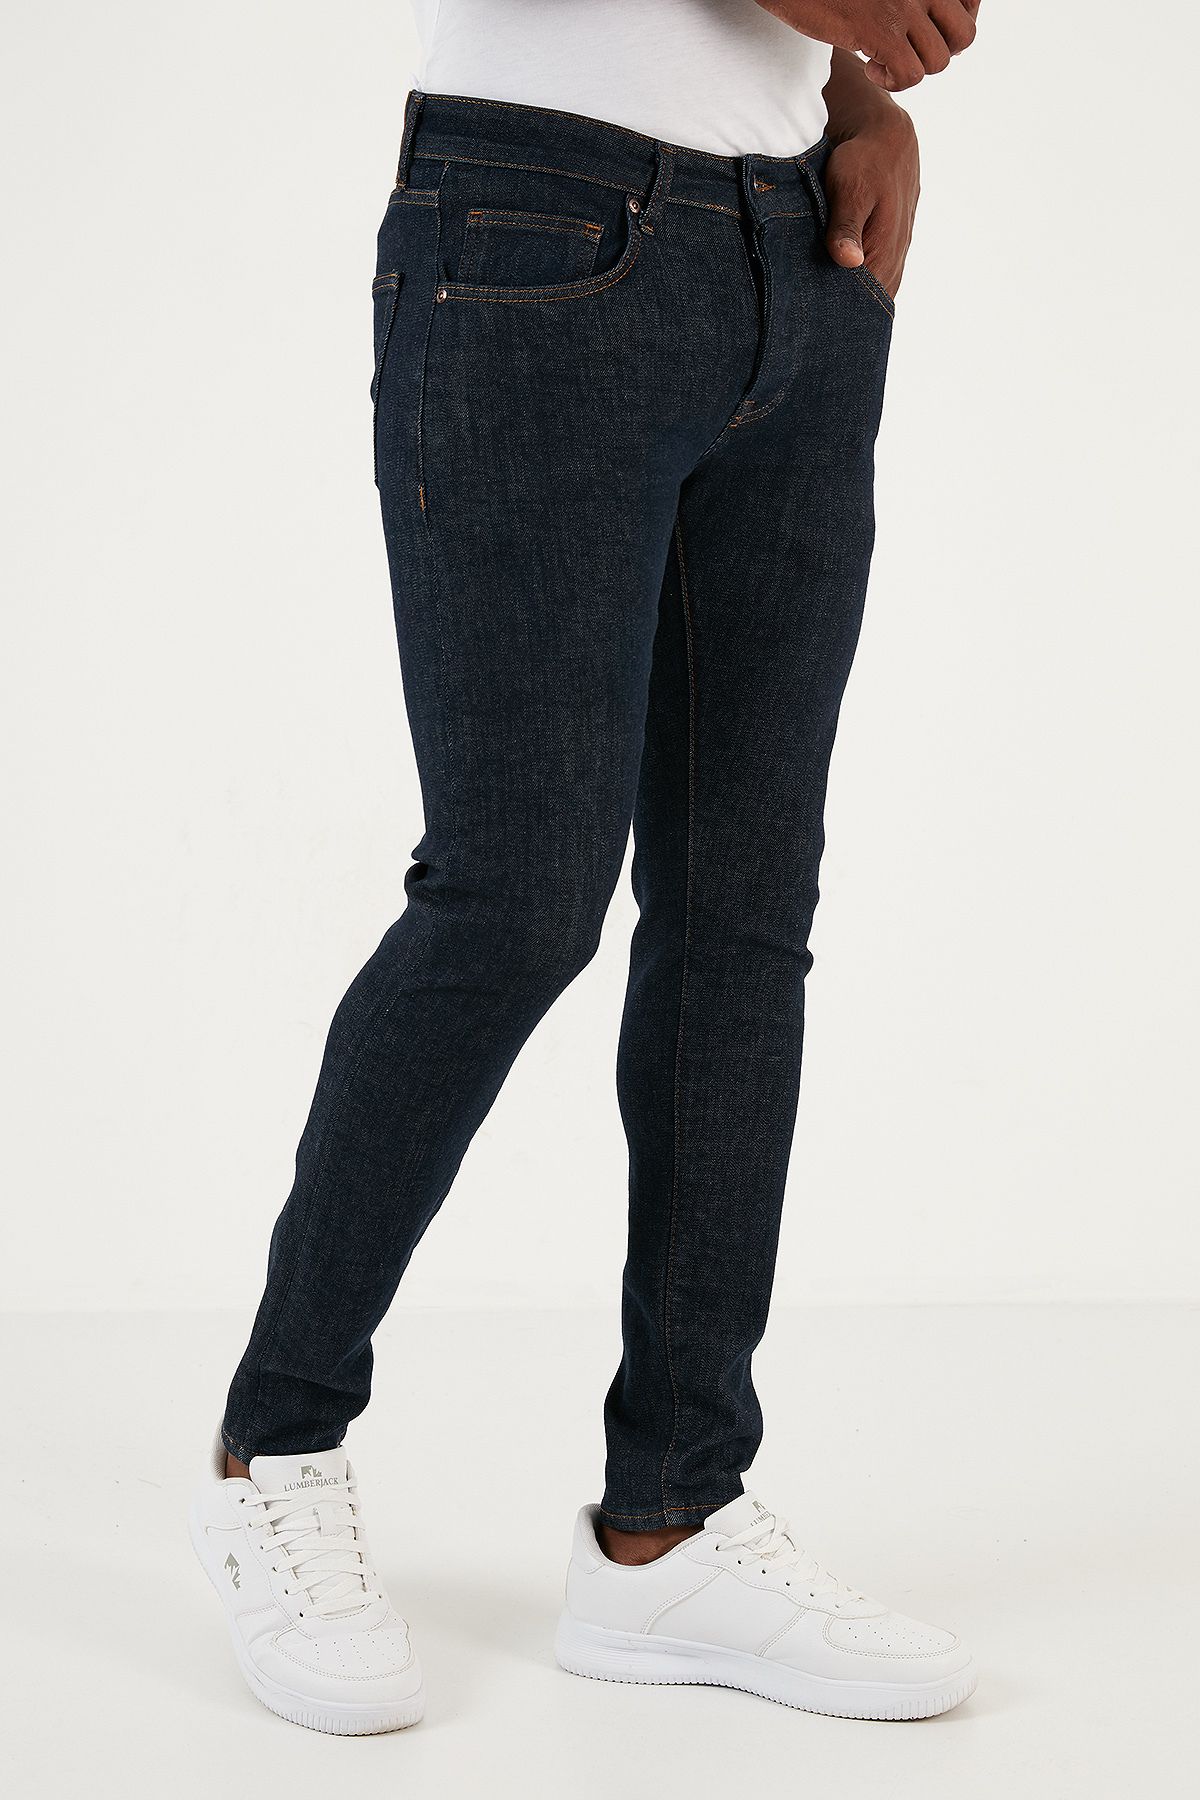 Buratti Streç Pamuklu Normal Bel Dar Paça Slim Fit Jeans Erkek KOT PANTOLON 1115J29NAPOLI